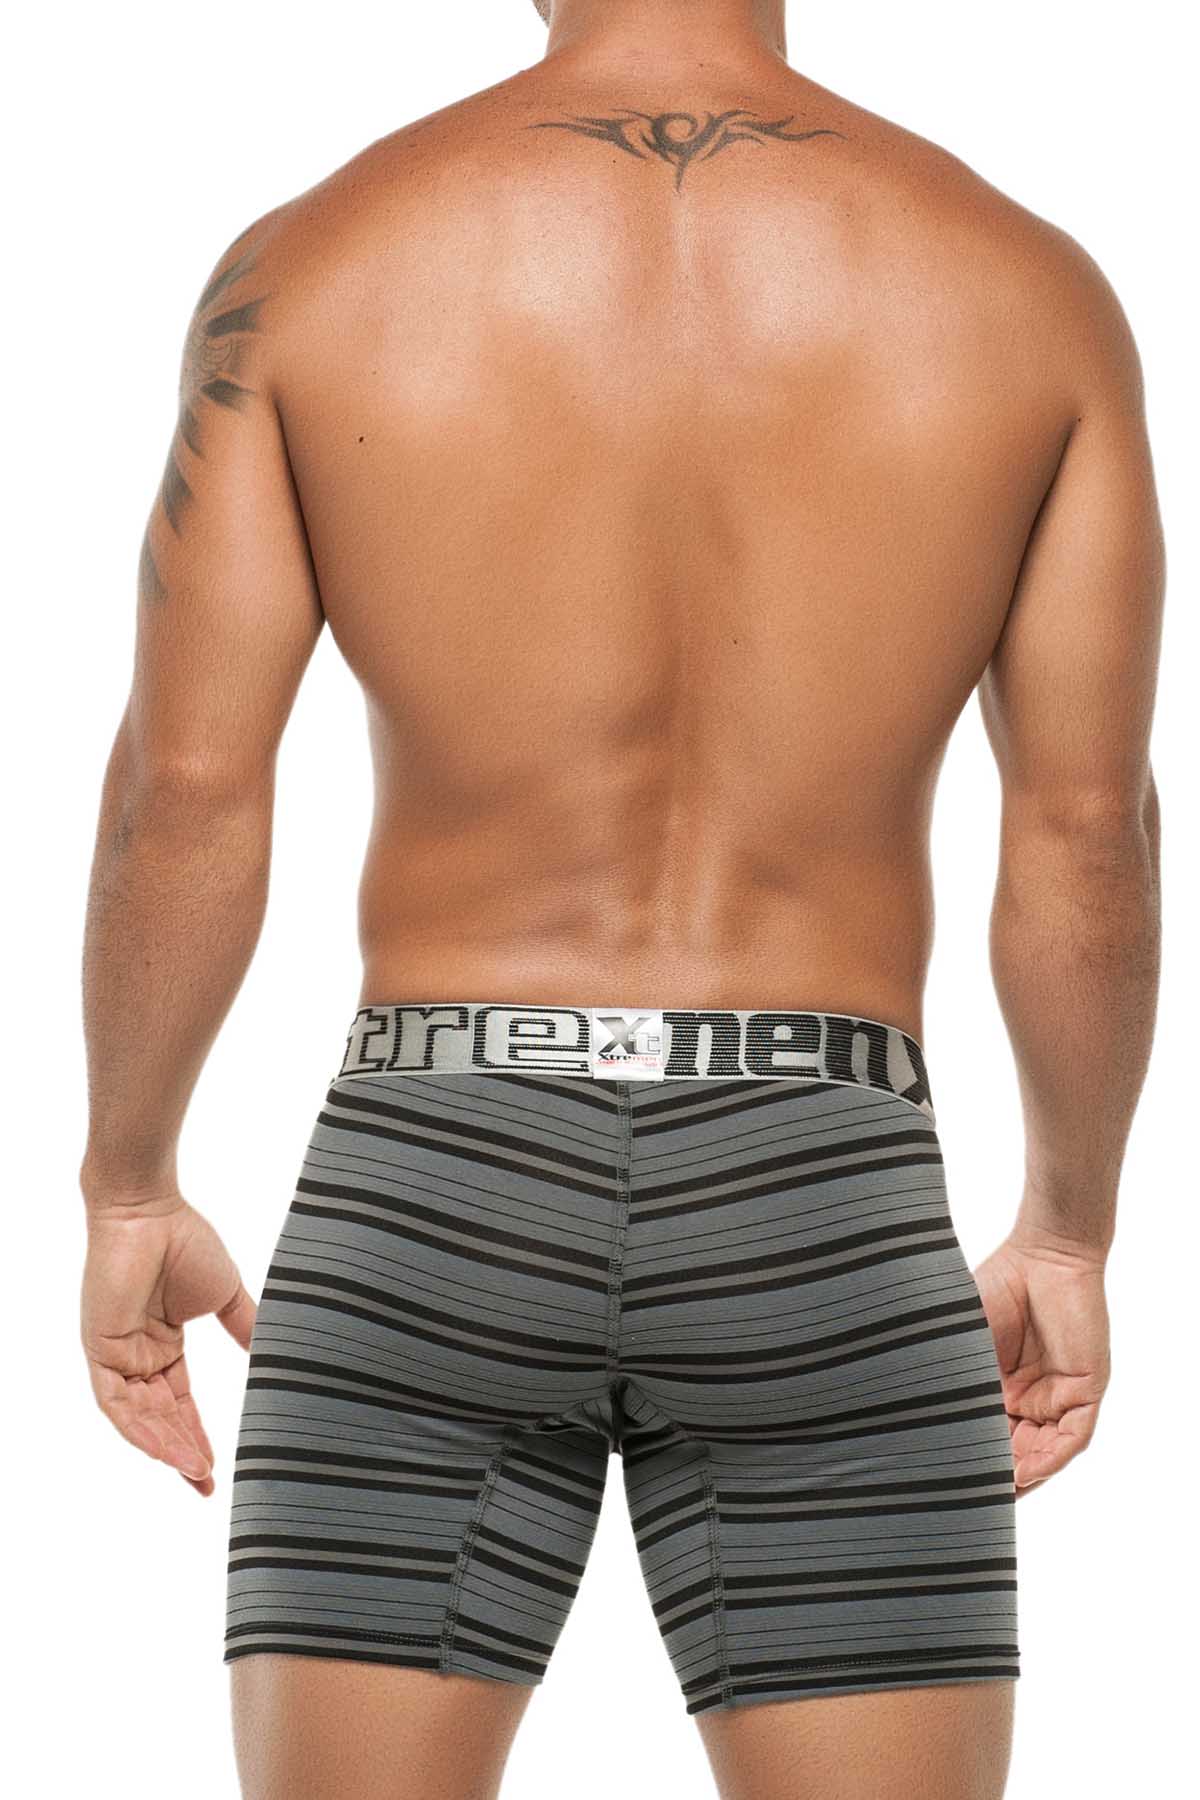 Xtremen Grey Thin Stripes Boxer Brief